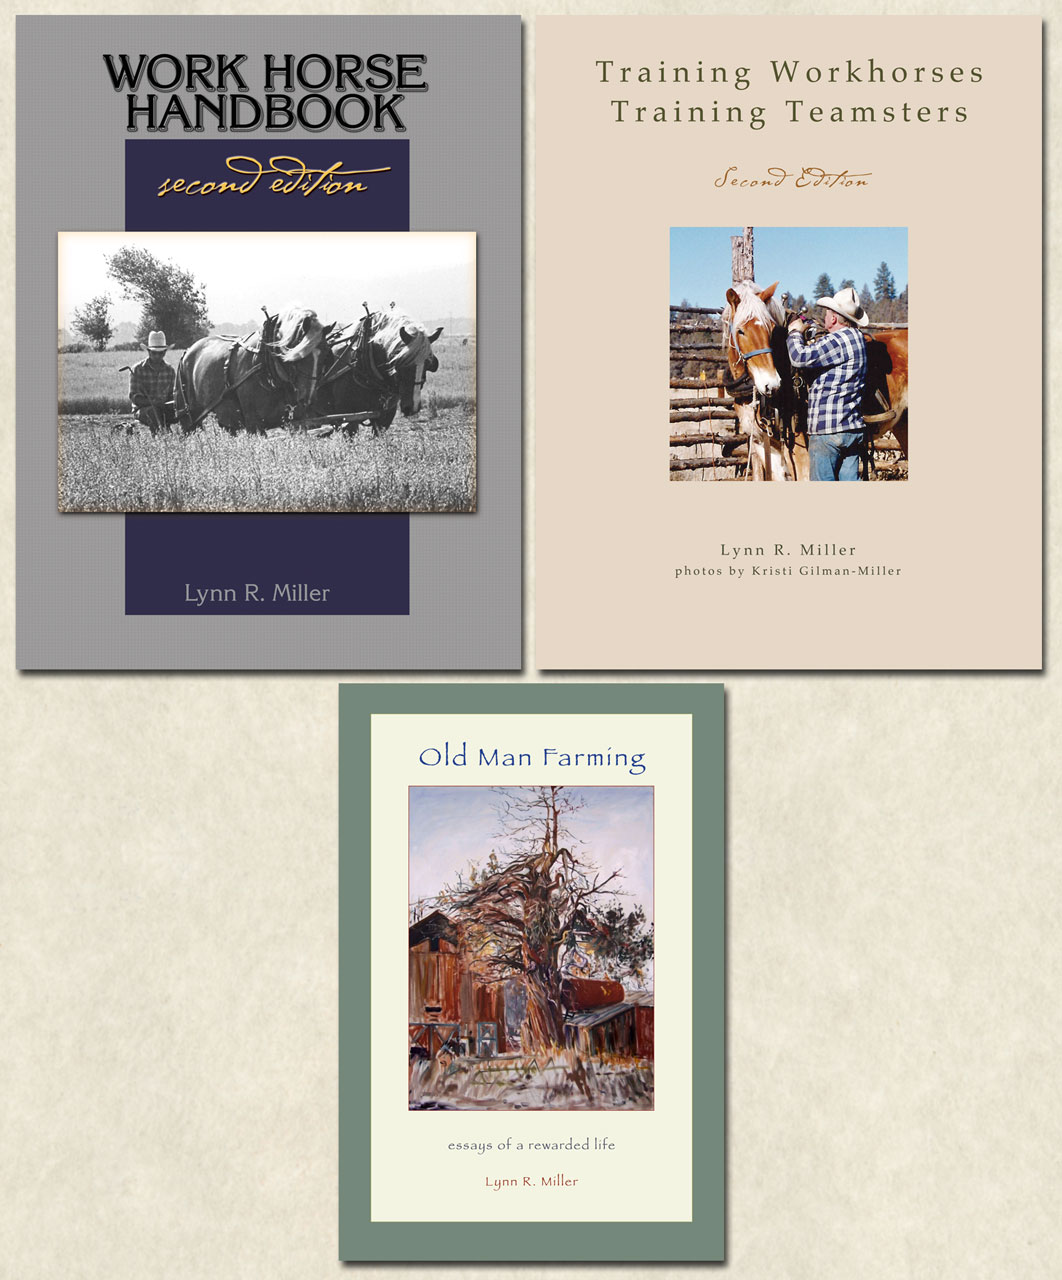 Work Horse Handbook • Training Workhorses / Training Teamsters • Old Man Farming